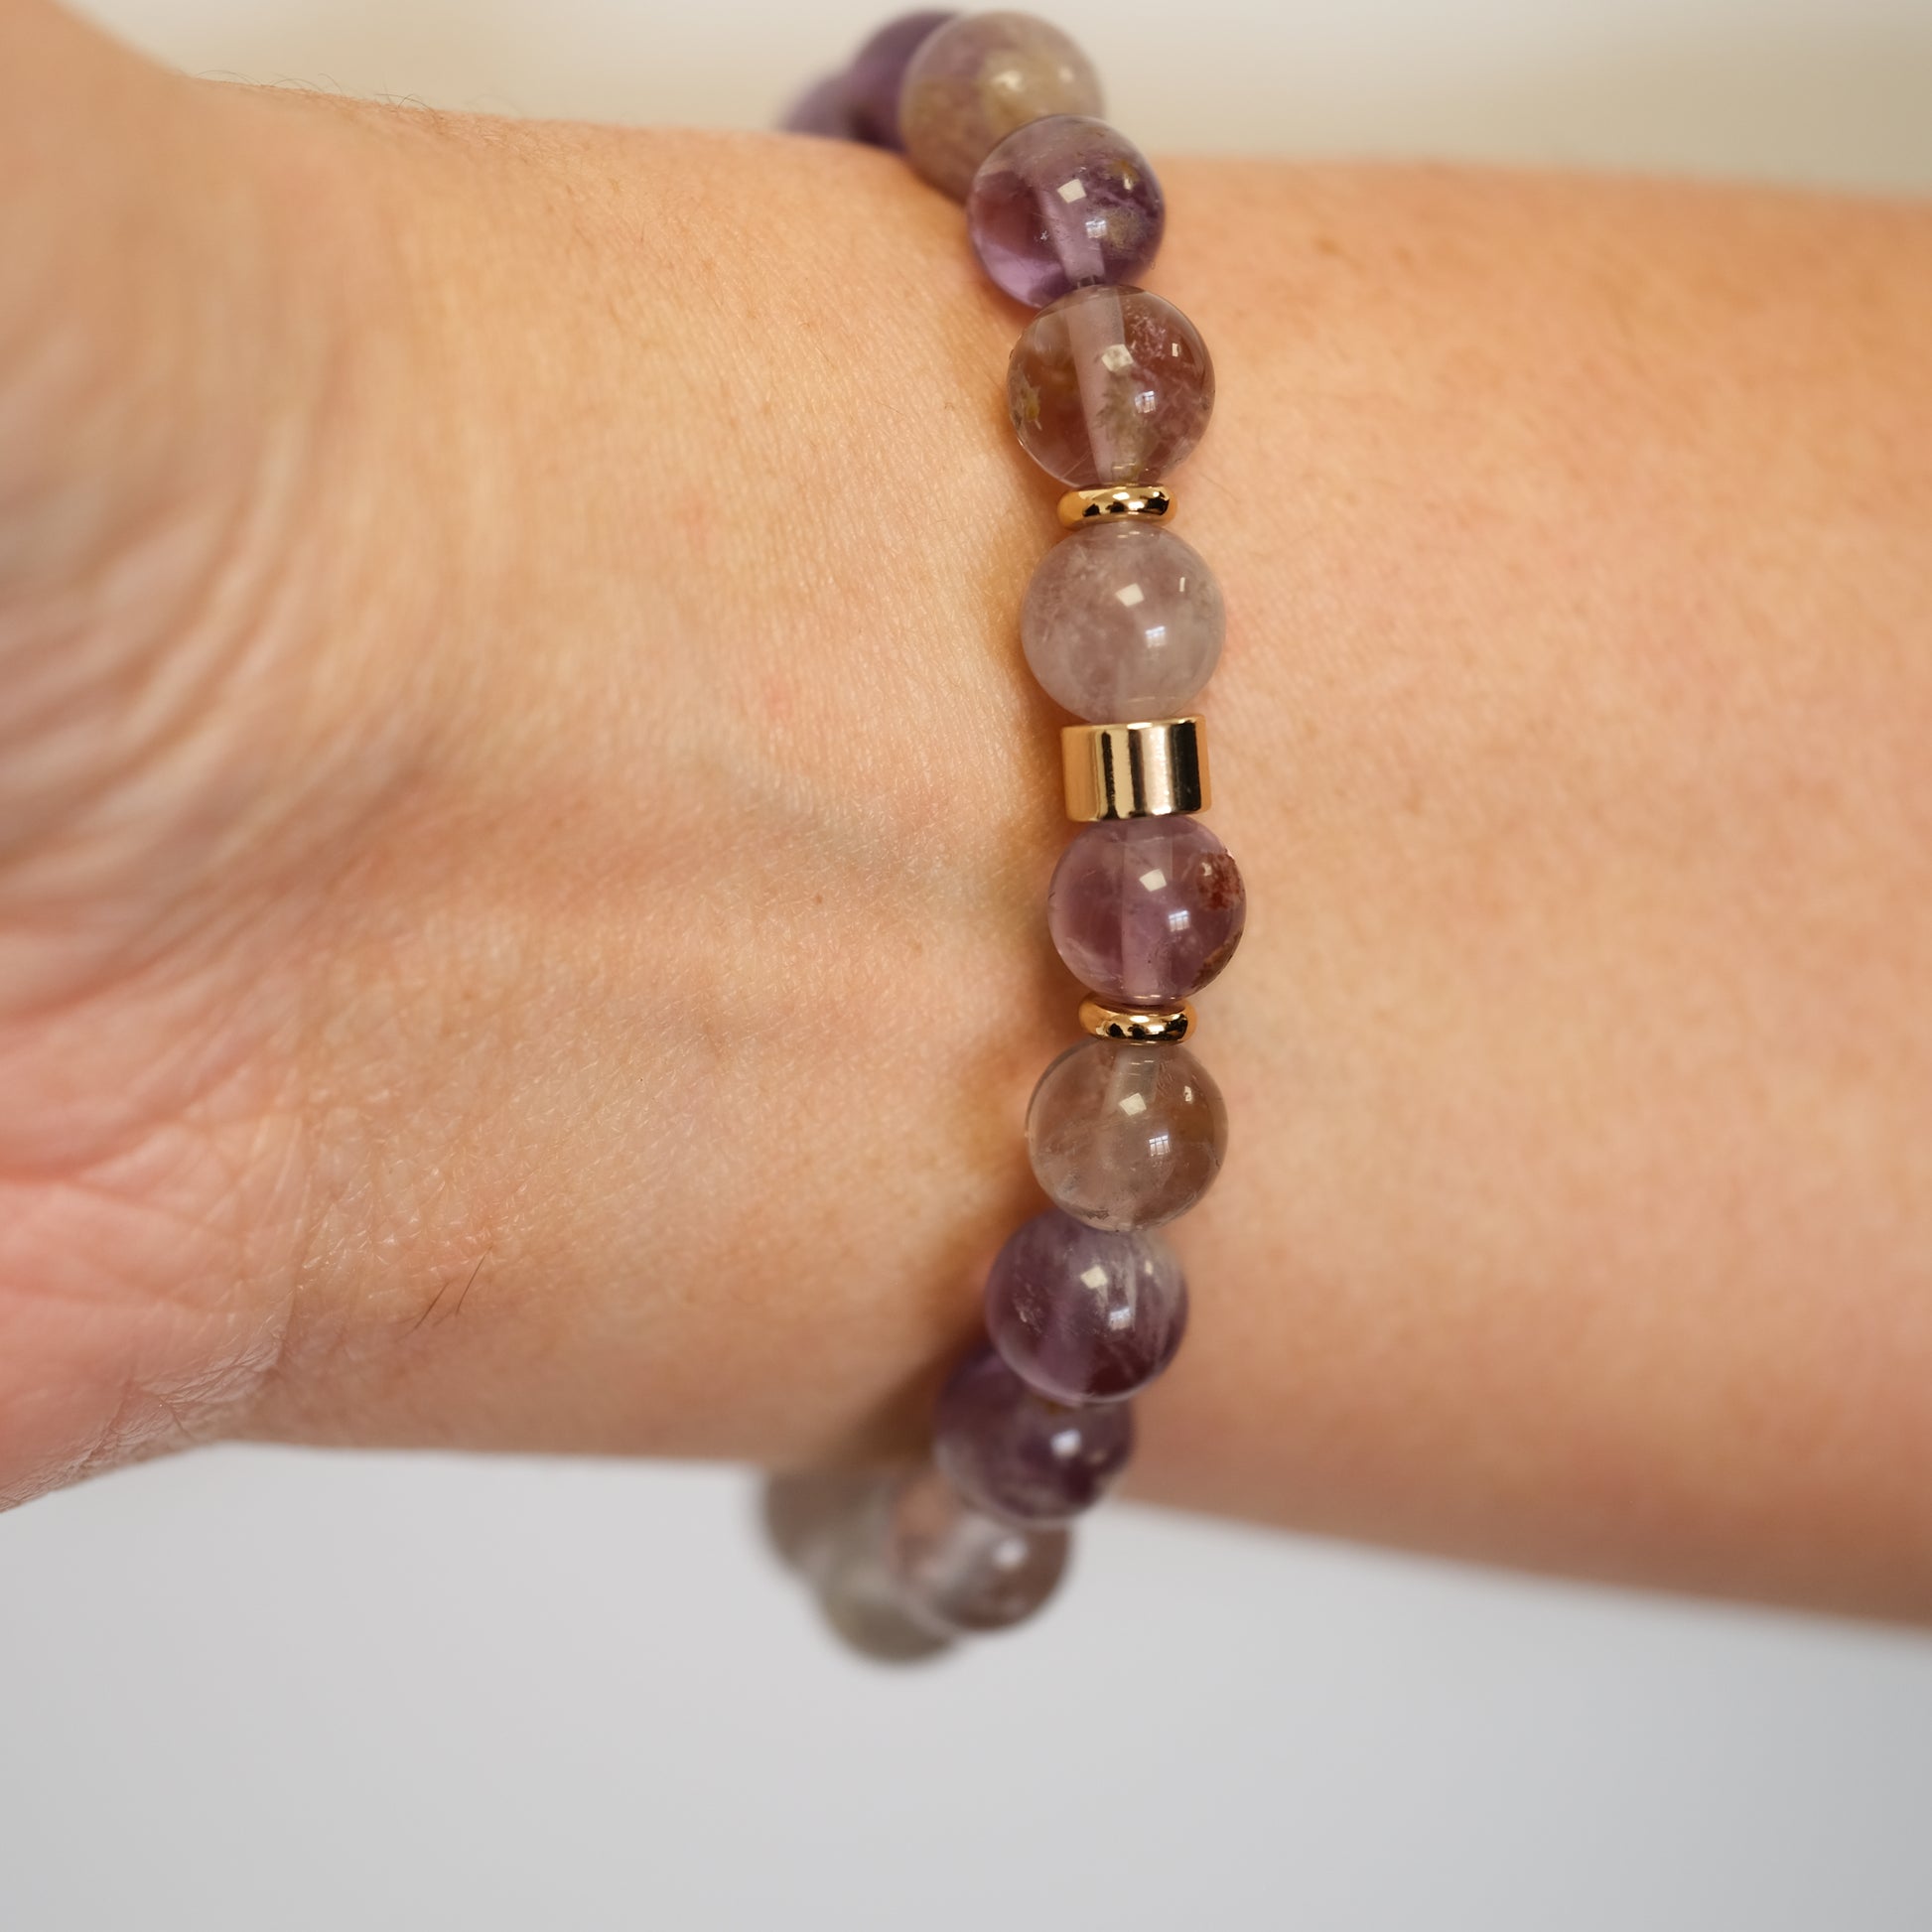 A phantom amethyst gemstone bracelet in 8mm beads worn on a model's wrist from behind